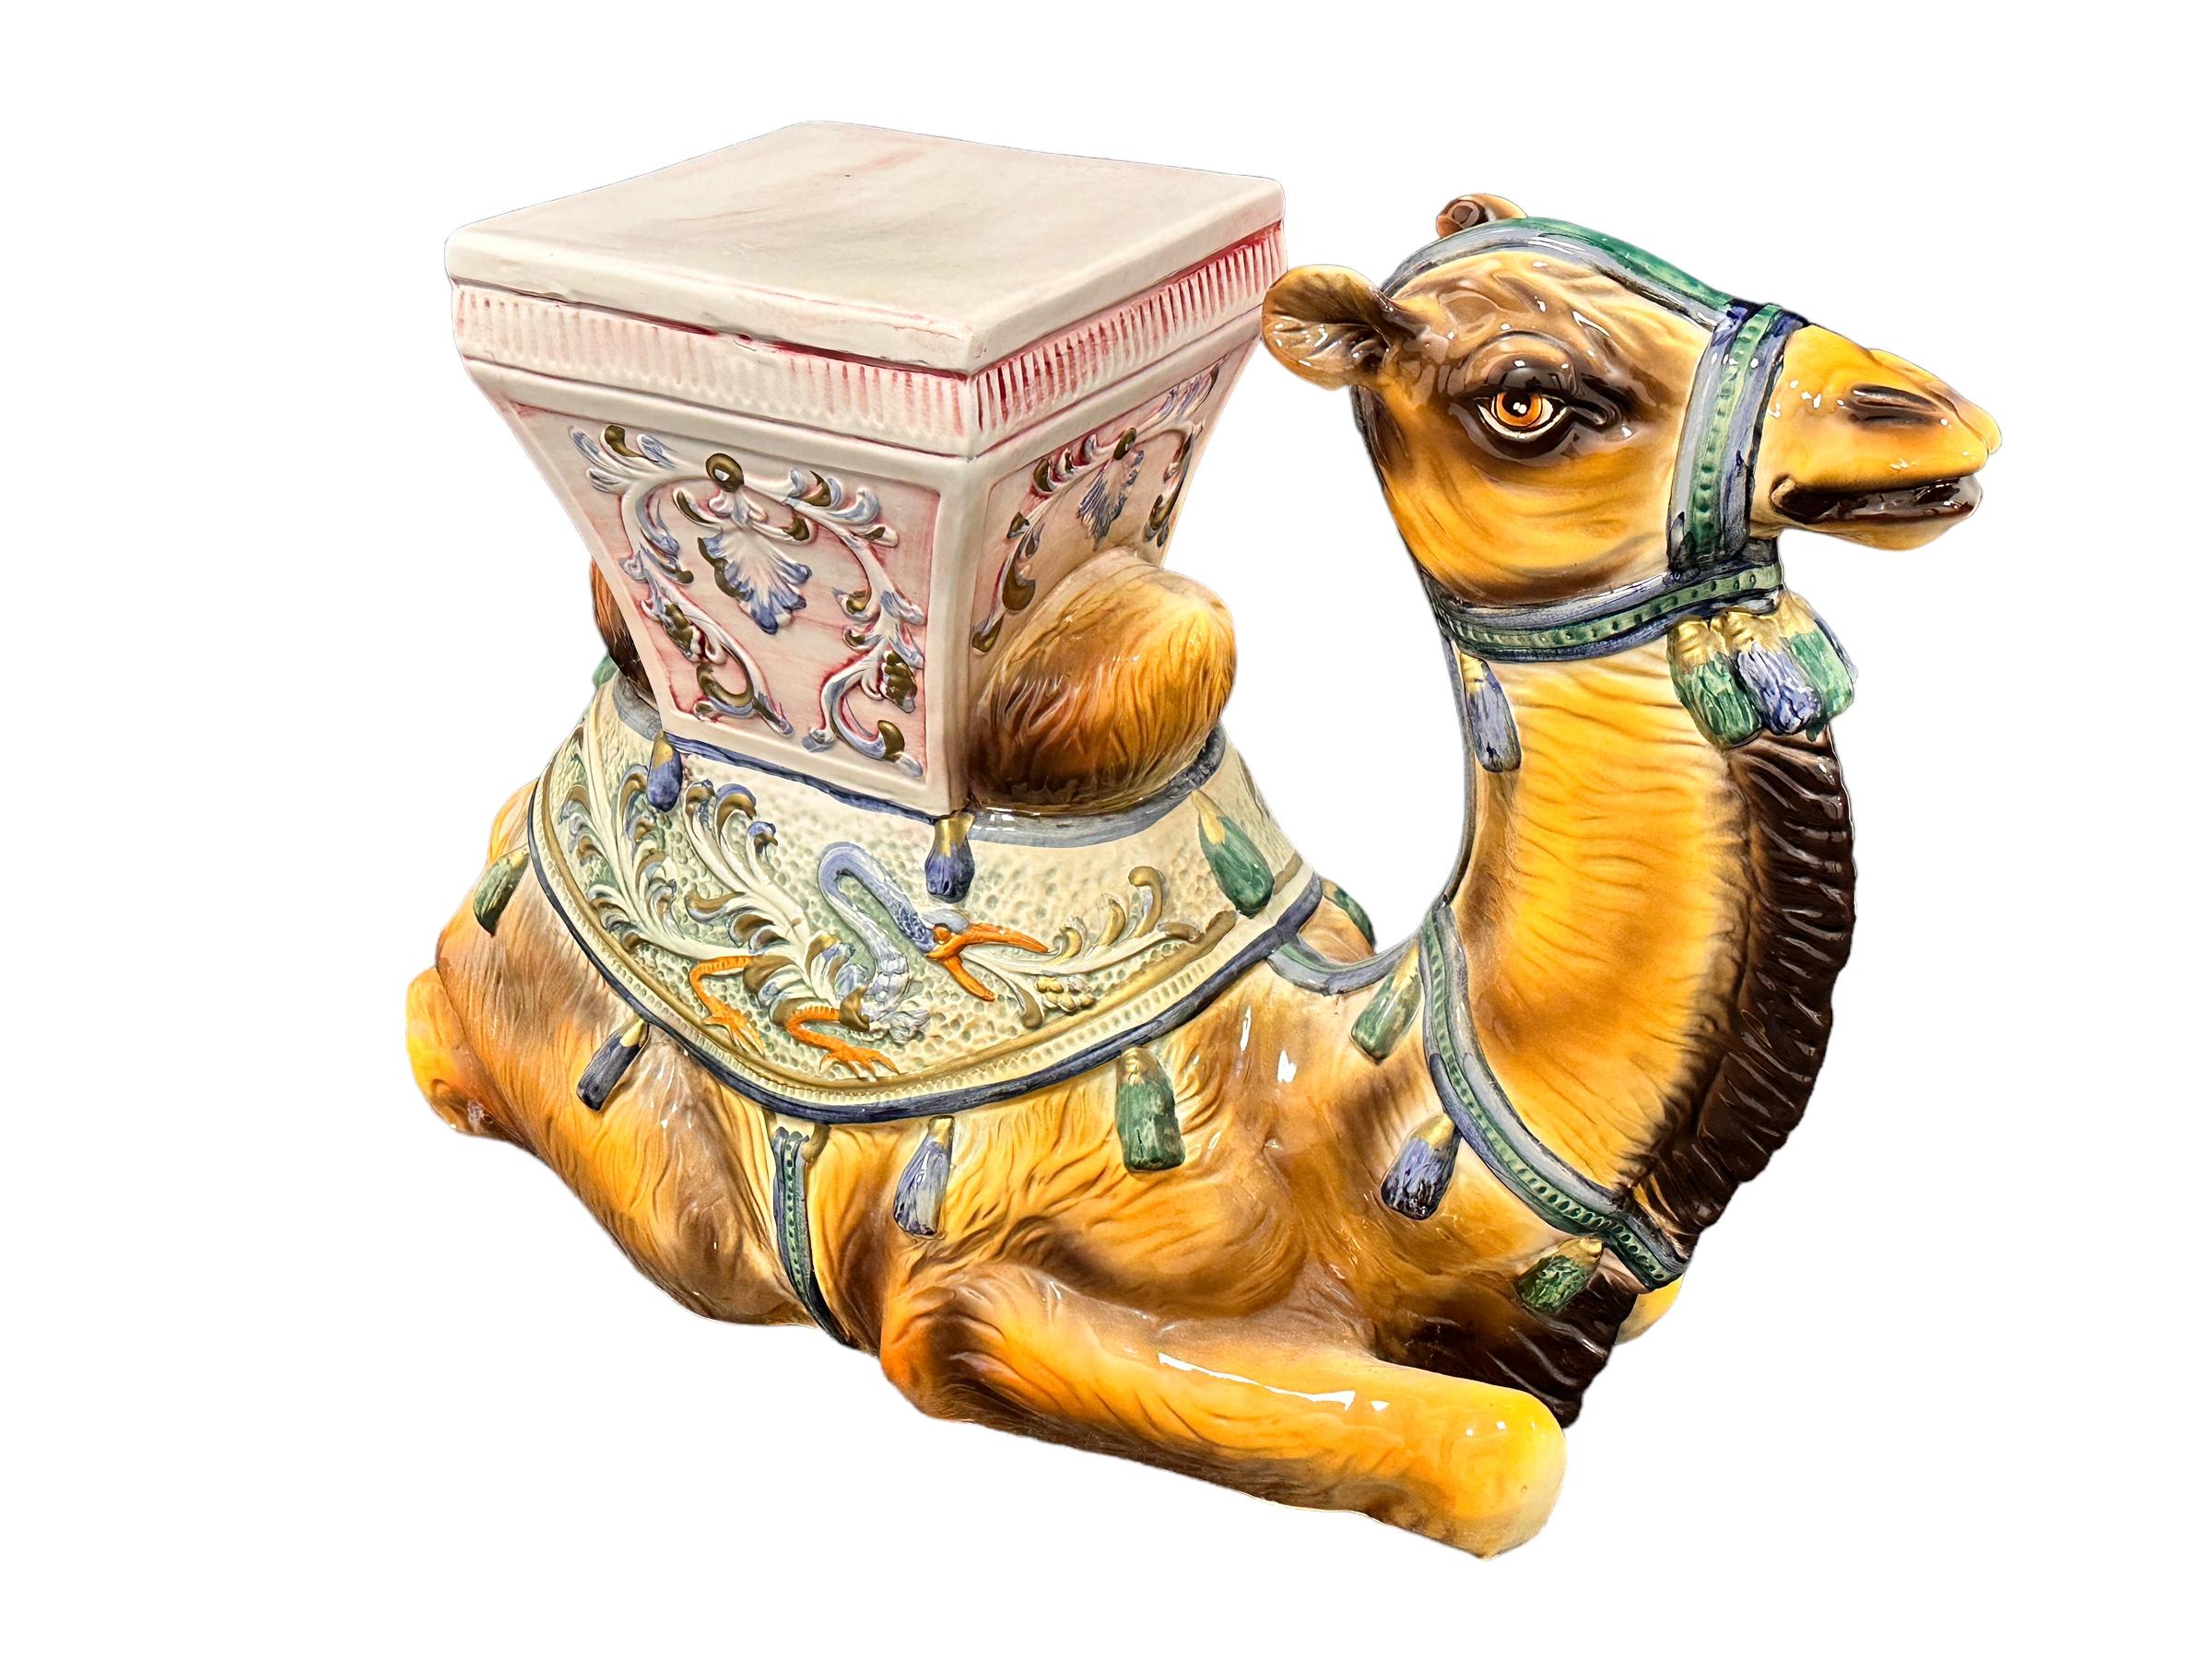 German Stunning Ceramic Hollywood Regency Camel Garden Stool or Side Table, Italy 1960s For Sale